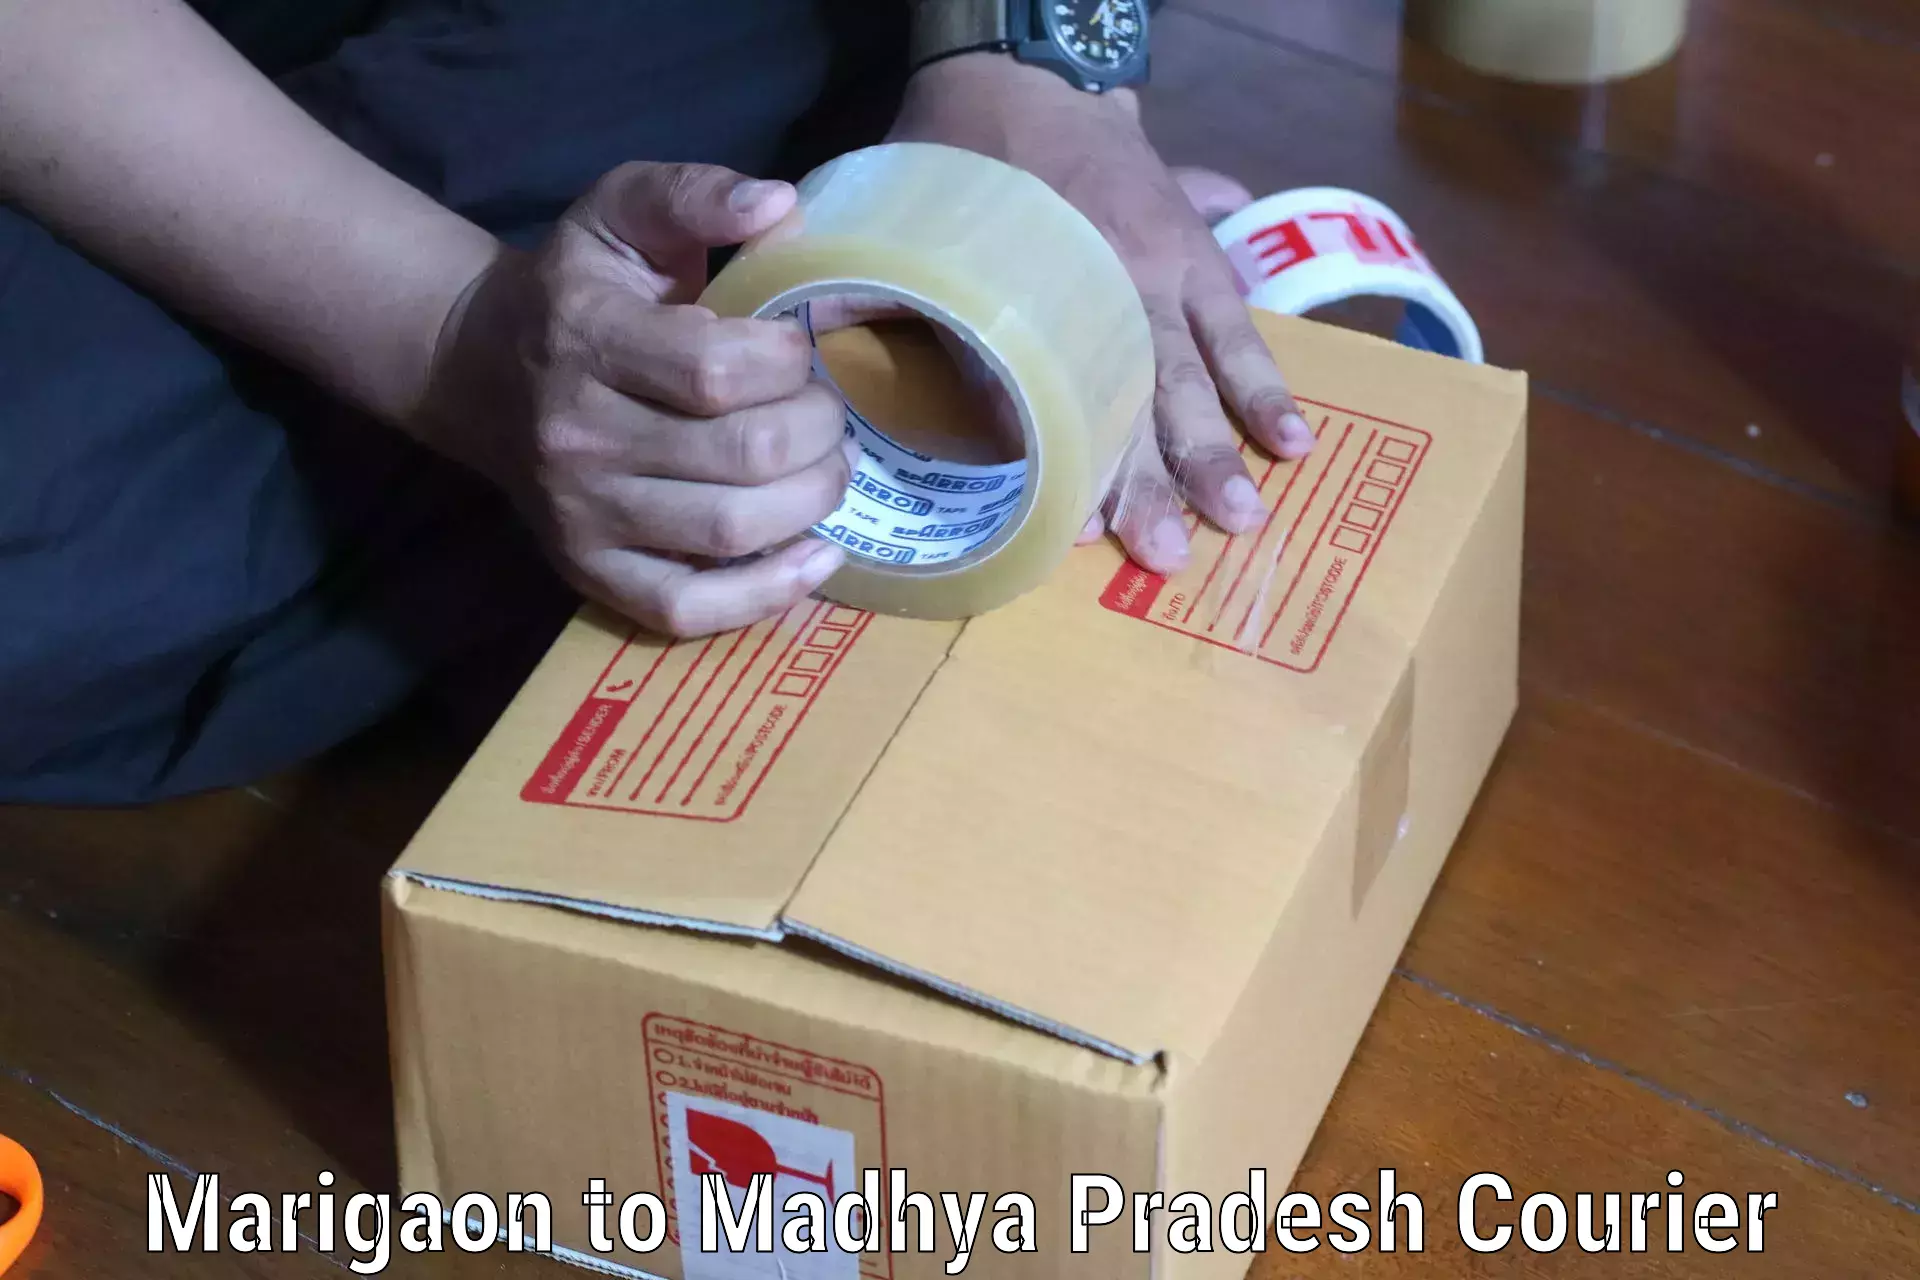 Efficient order fulfillment Marigaon to Madhya Pradesh